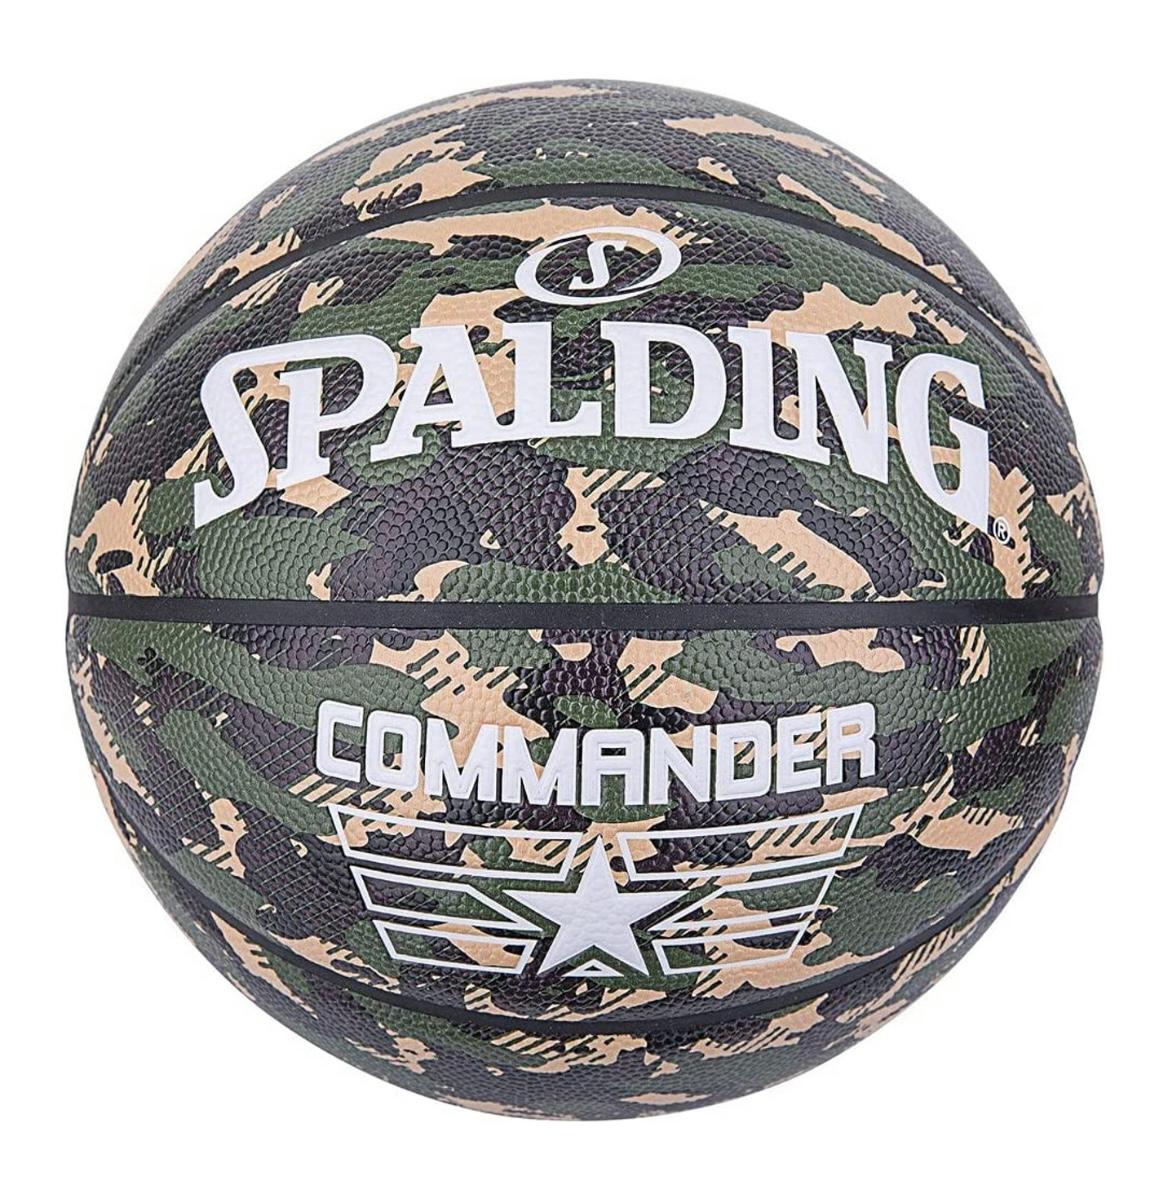 Spalding Commander Basketball